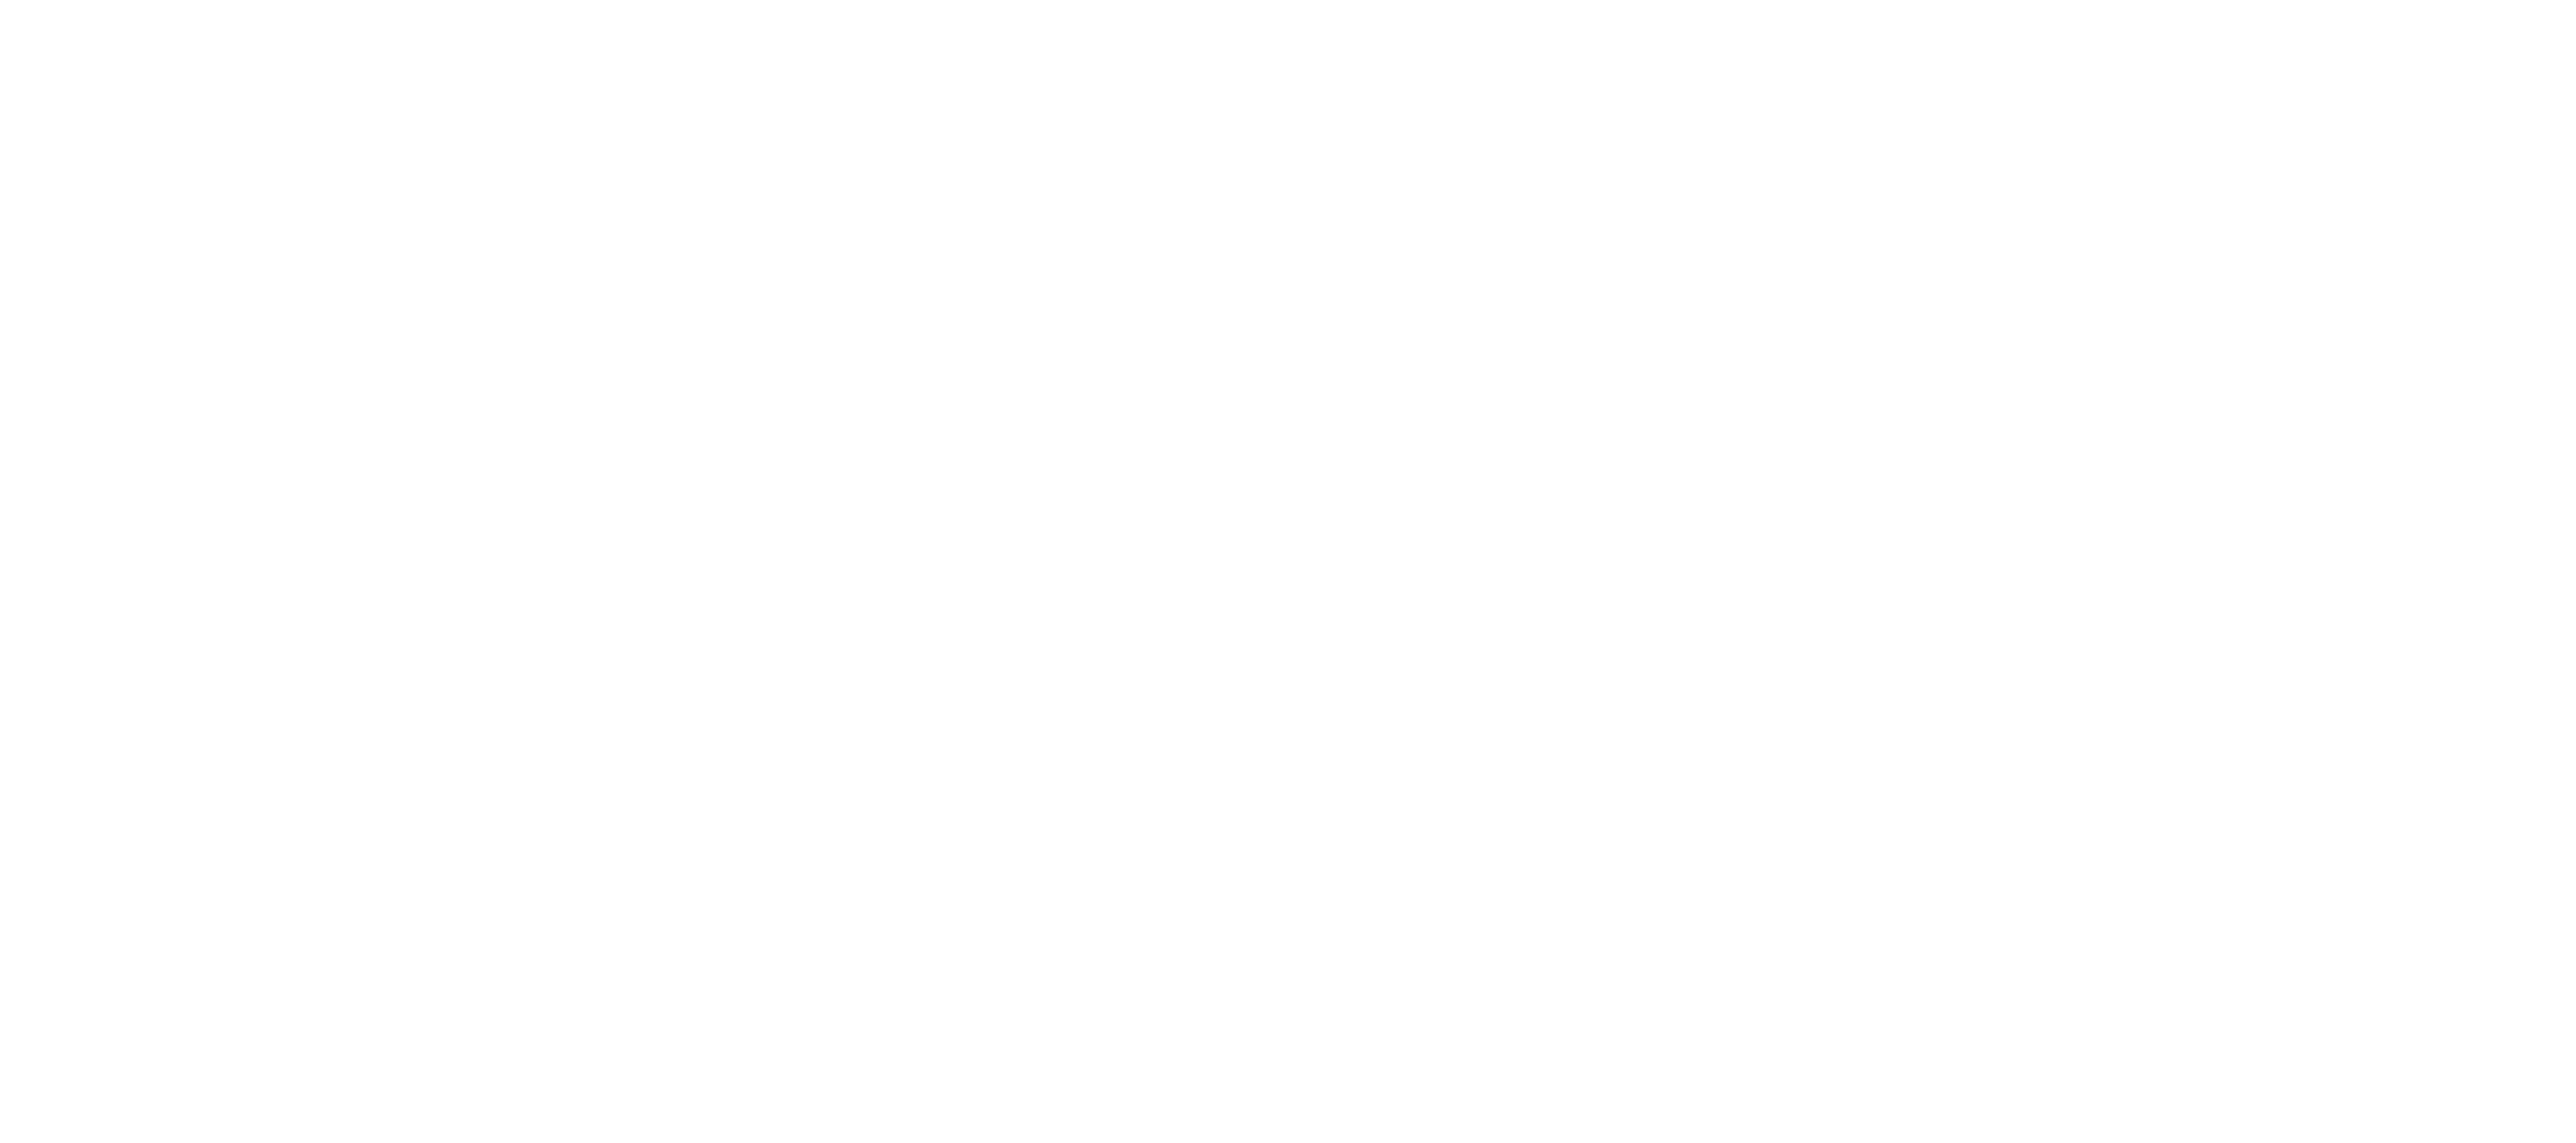 Trophy Signature Homes Logo